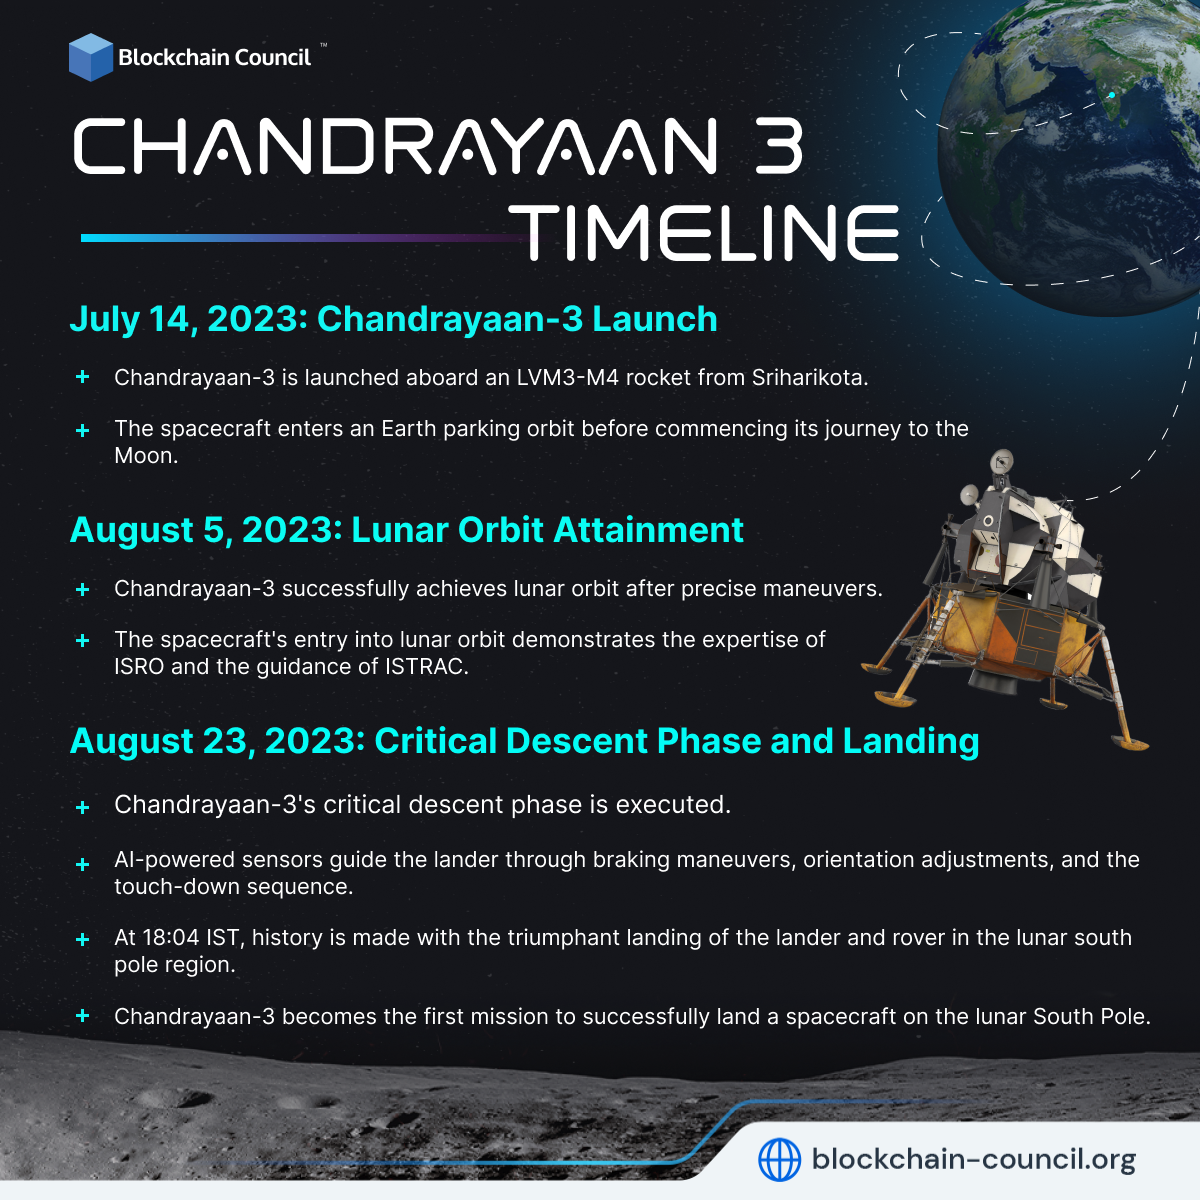 Chandrayaan 3 Timeline